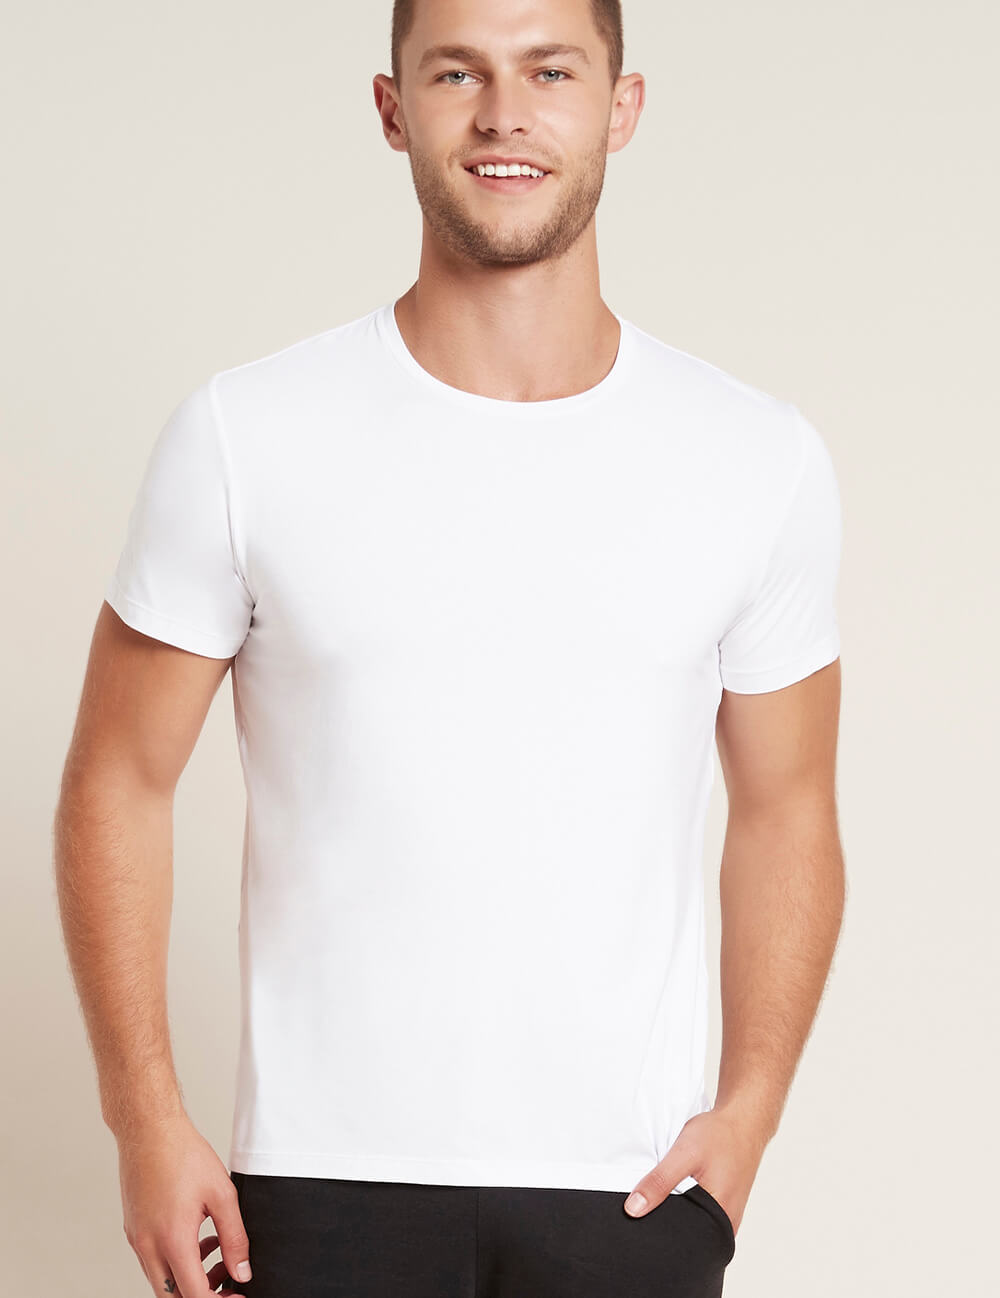 Boody Wear Men's Organic Bamboo Crew Neck T-Shirt - White - Small